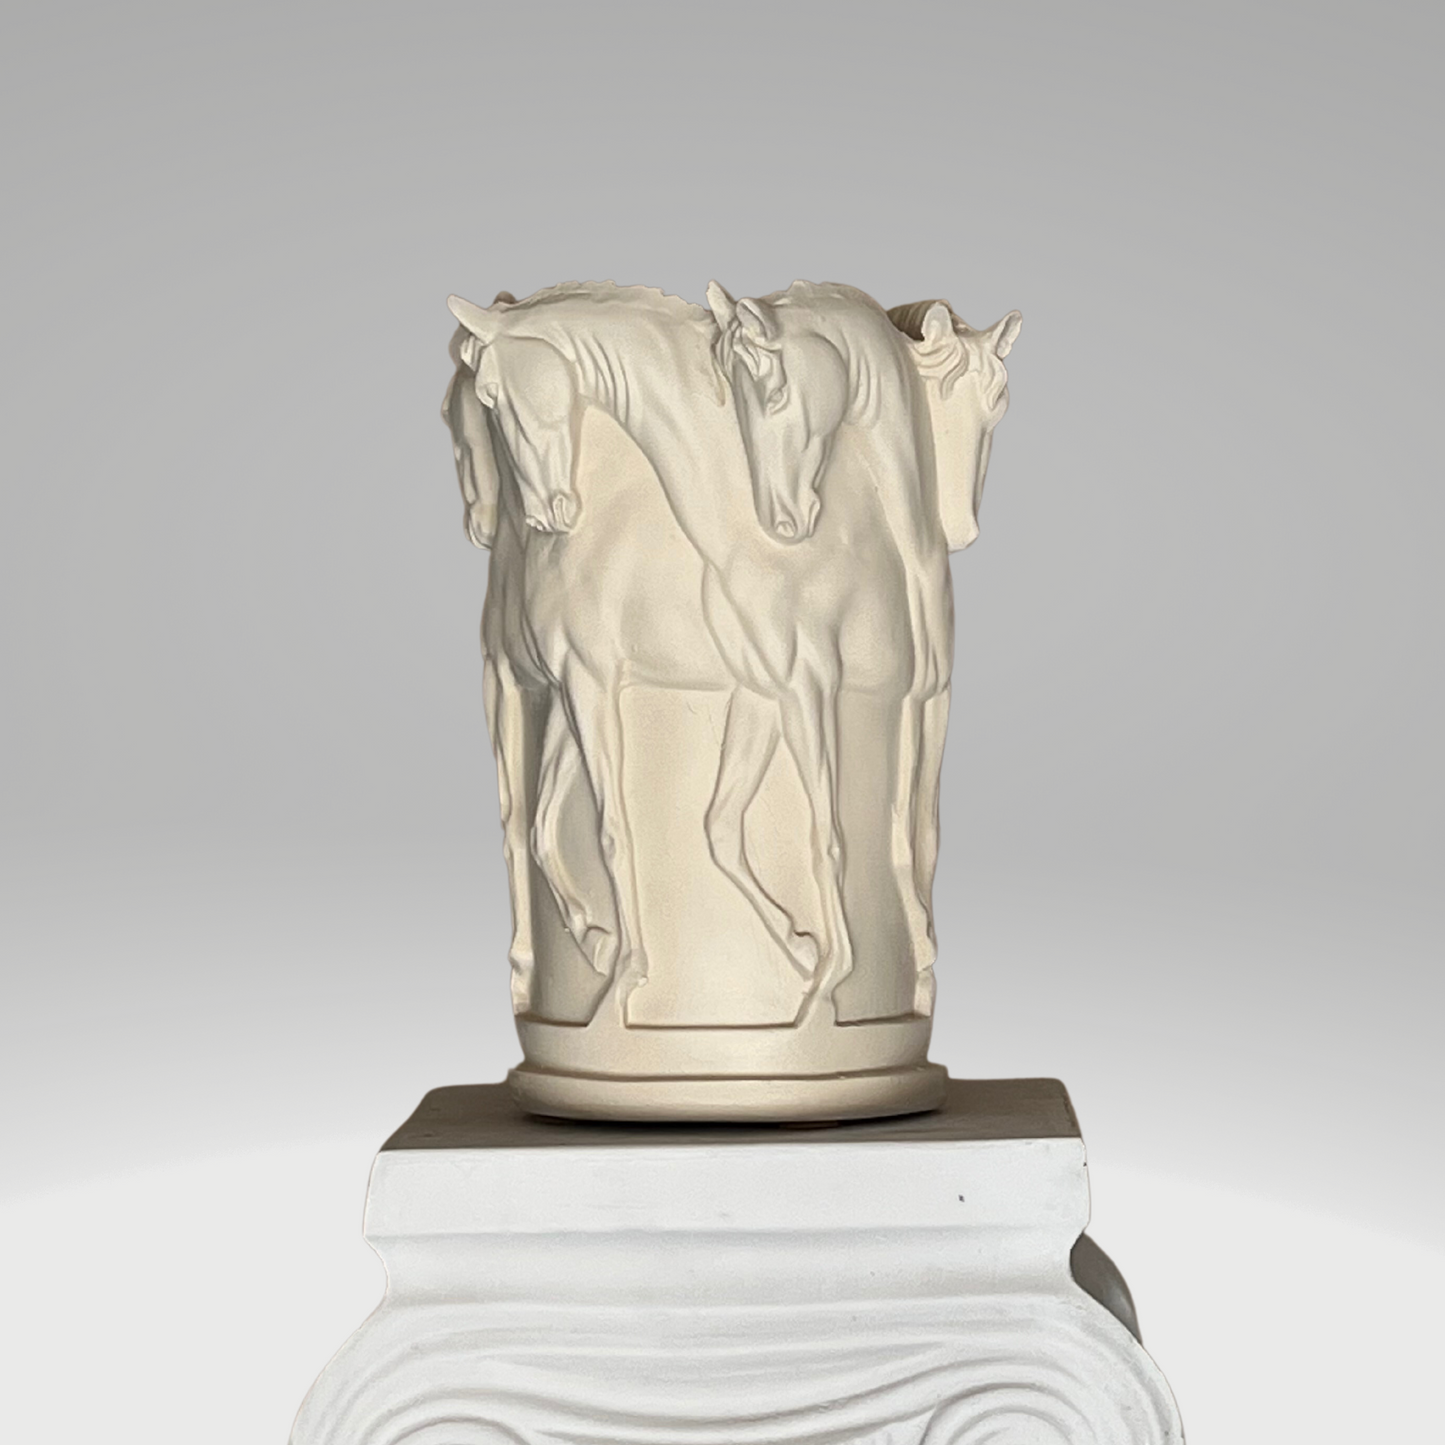 Six Stallion Horse Vase | Designer Decor Piece